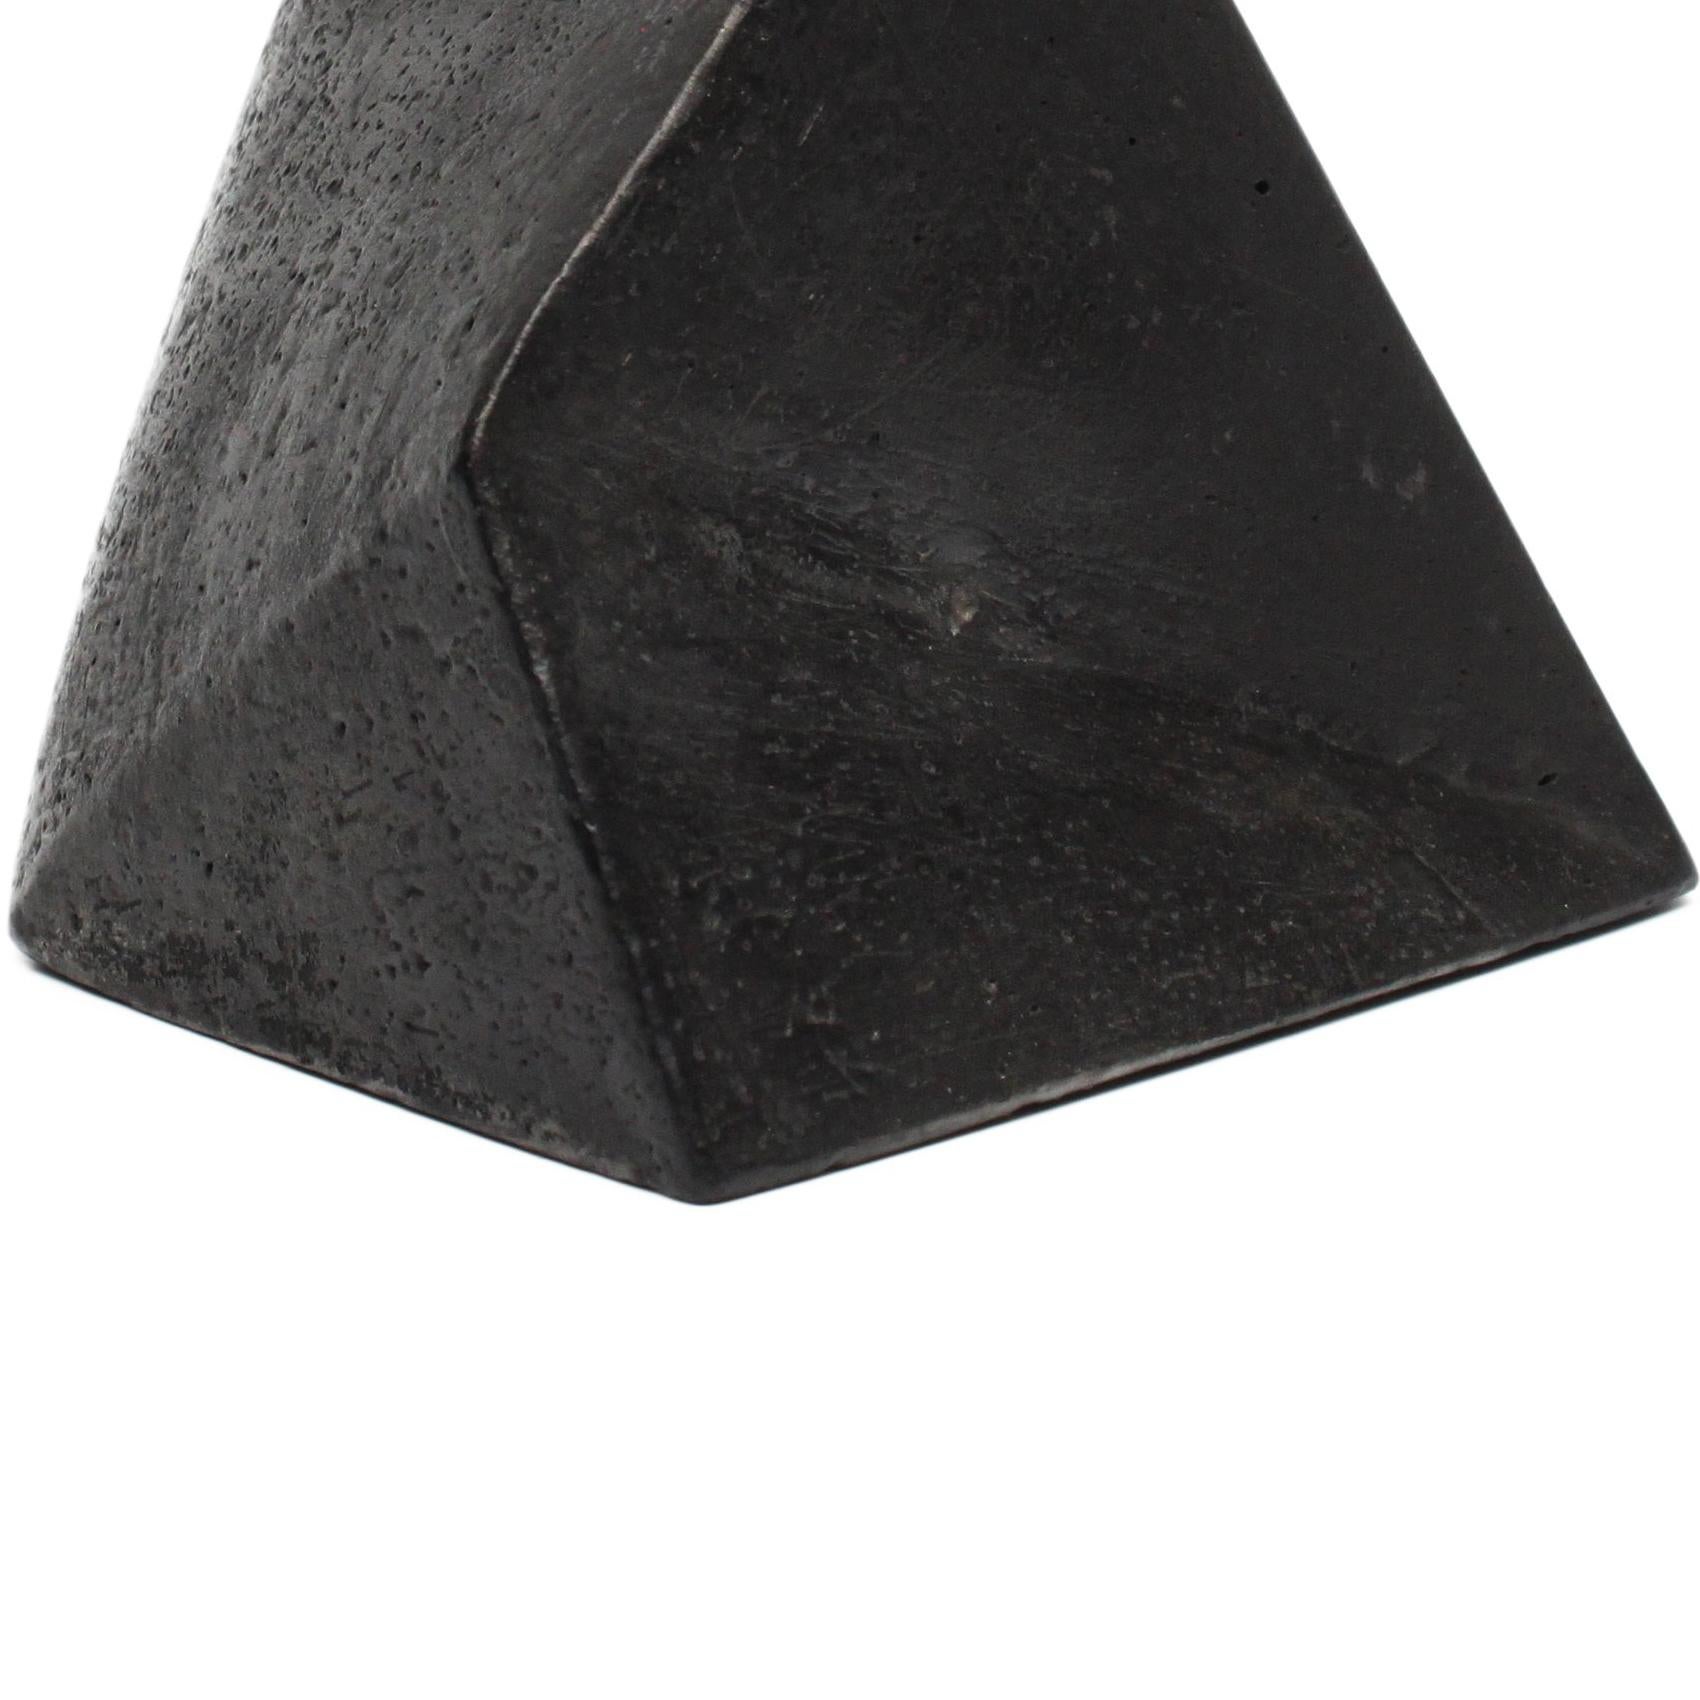 Untitled (Alphabet) 4 - Black Abstract Sculpture by Anna Hepler